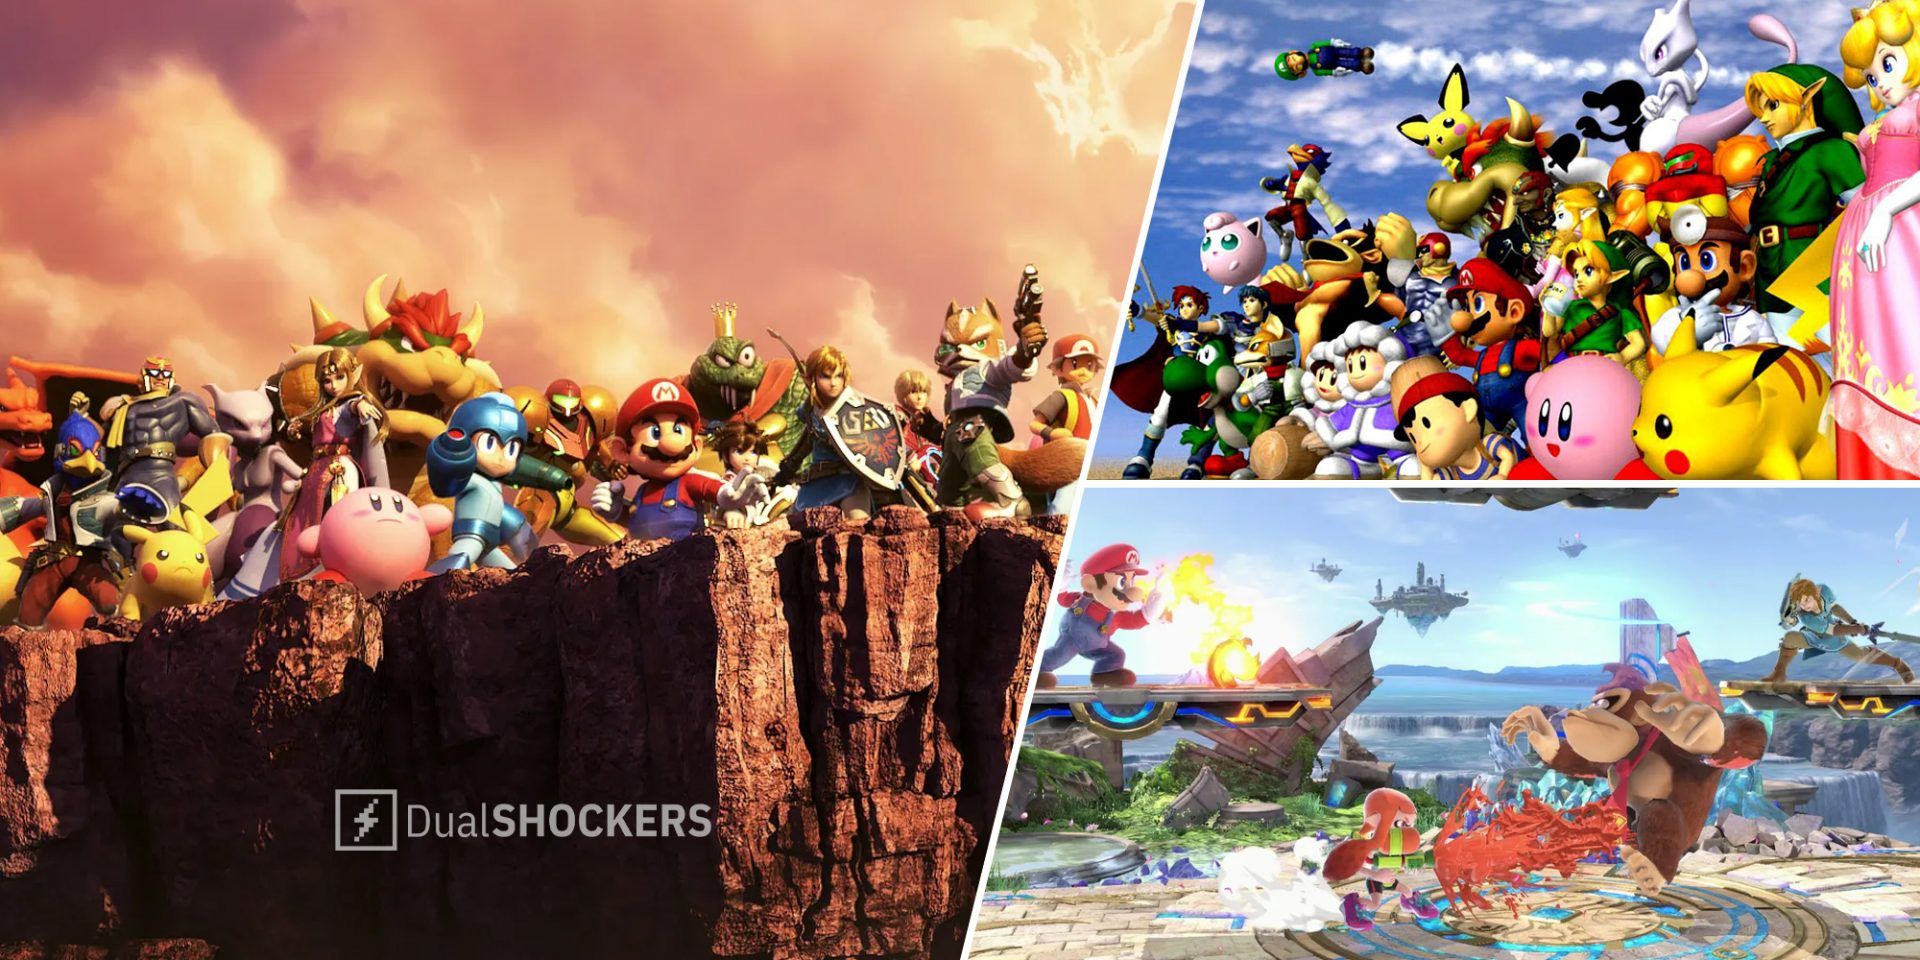 Super Smash Bros Ultimate characters on left, Super Smash Bros Melee on top right, Super Smash Bros Ultimate Splatoon girl, Mario, and Donkey Kong battle screenshot on bottom right